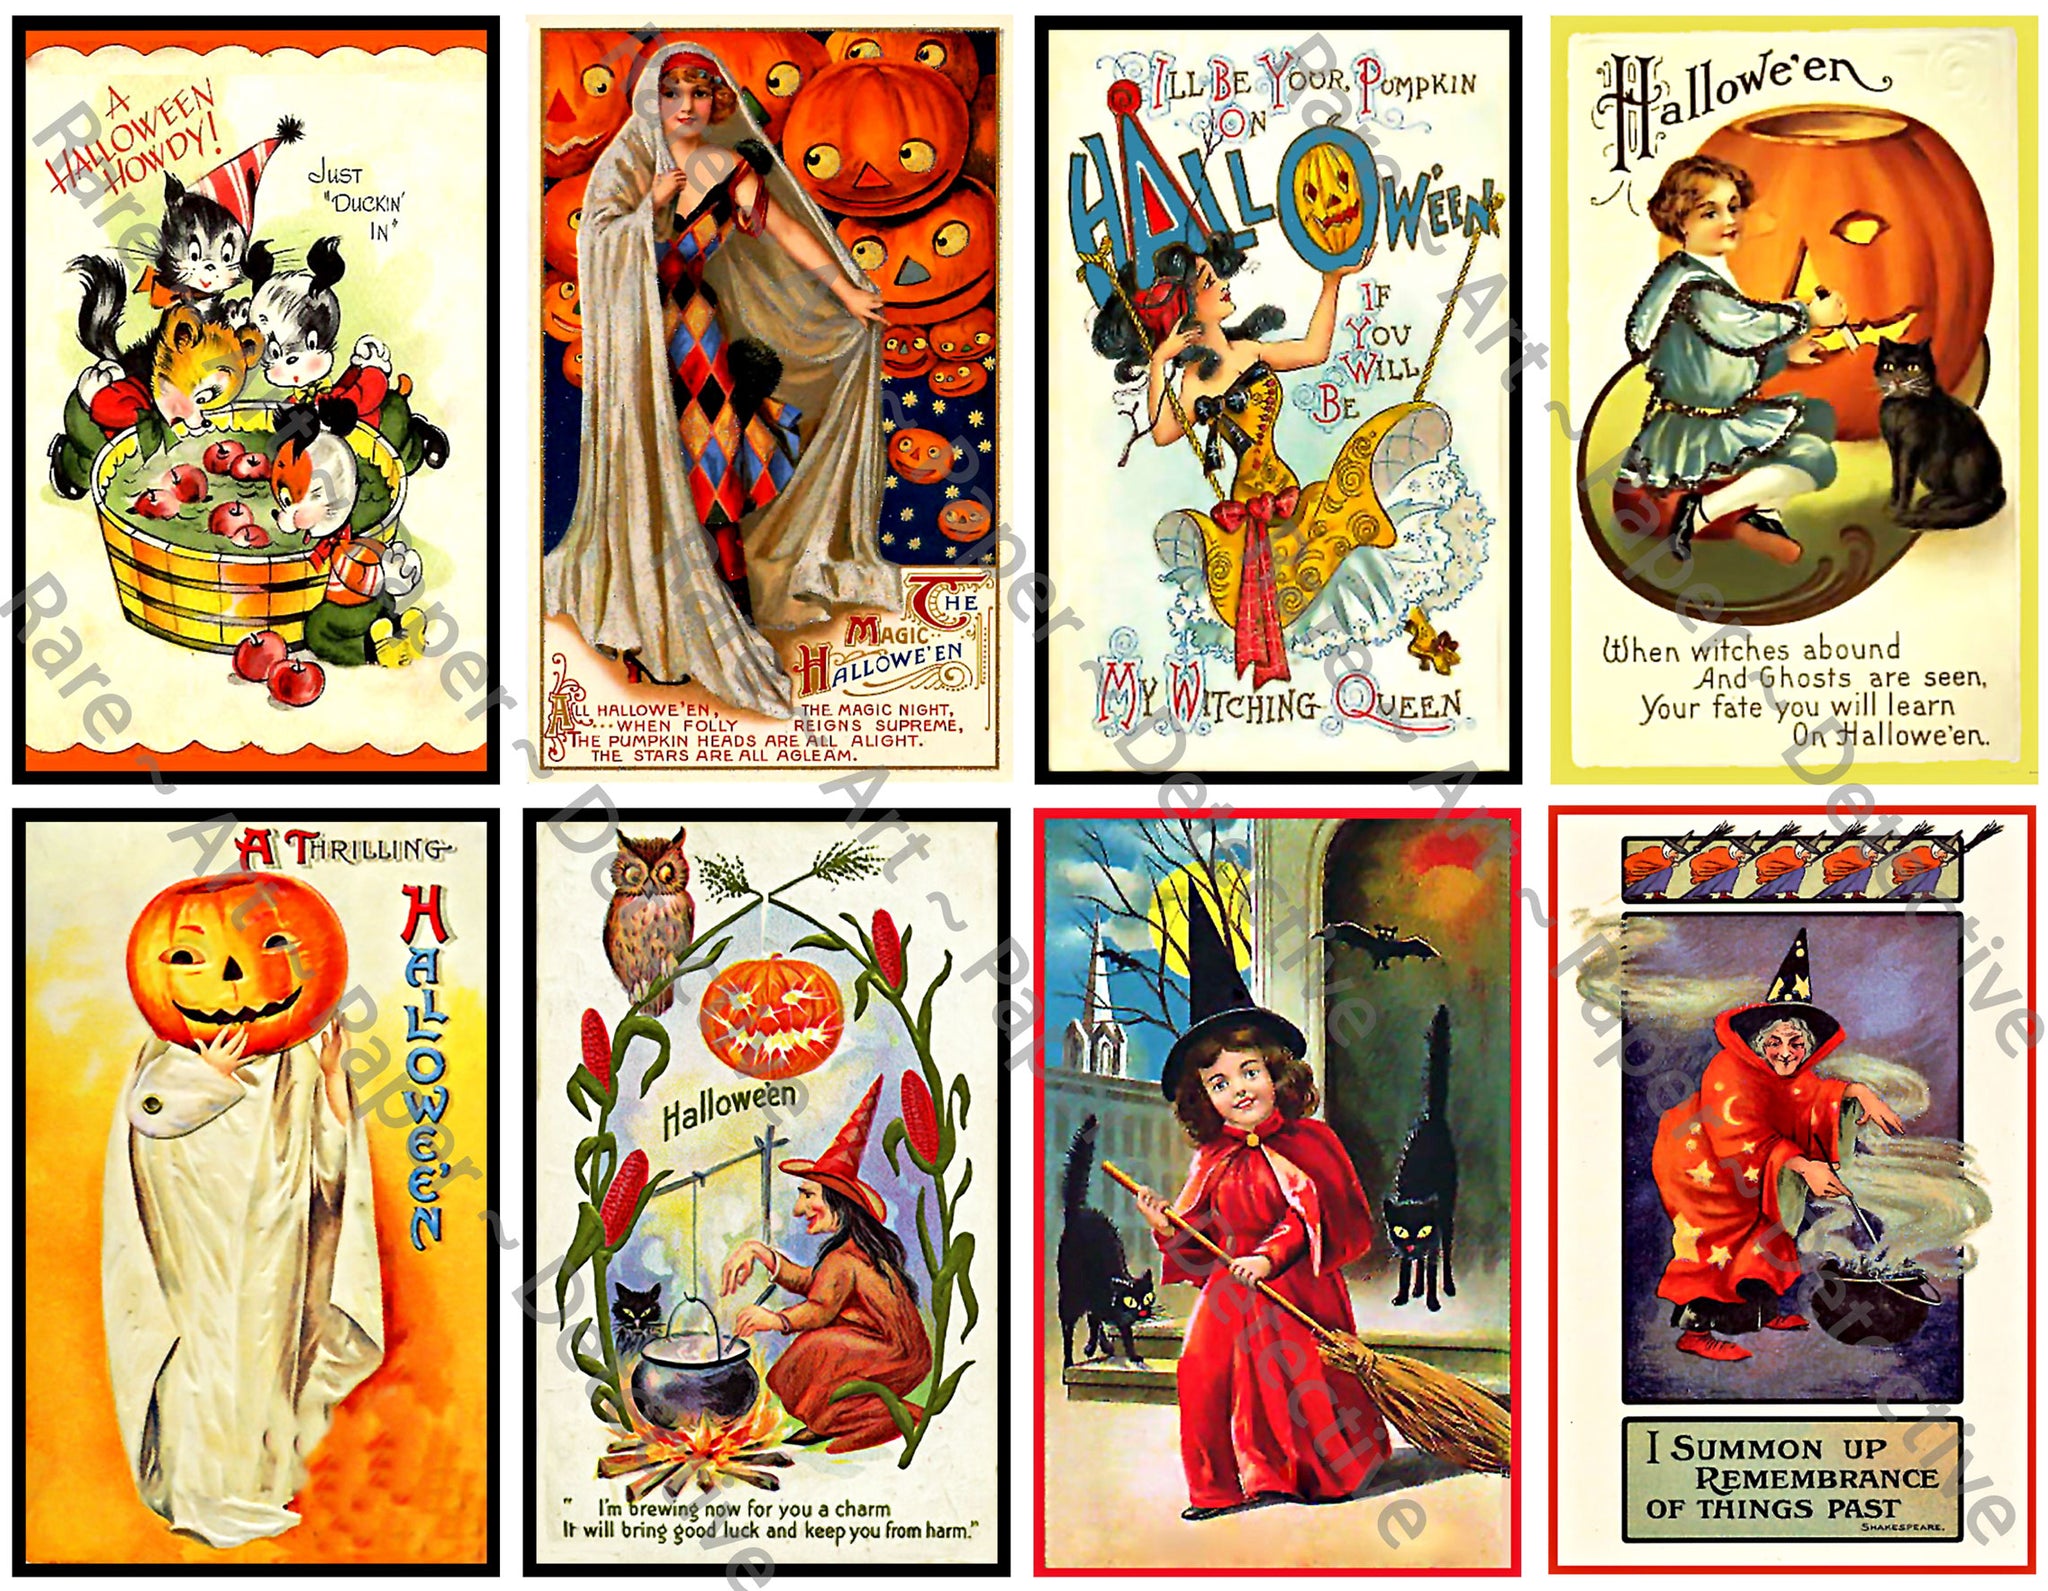 Halloween Clip Art Stickers, Victorian Halloween Postcard Images & Spooky Illustrations, Black Cats & Pumpkins, Halloween Party Novelty